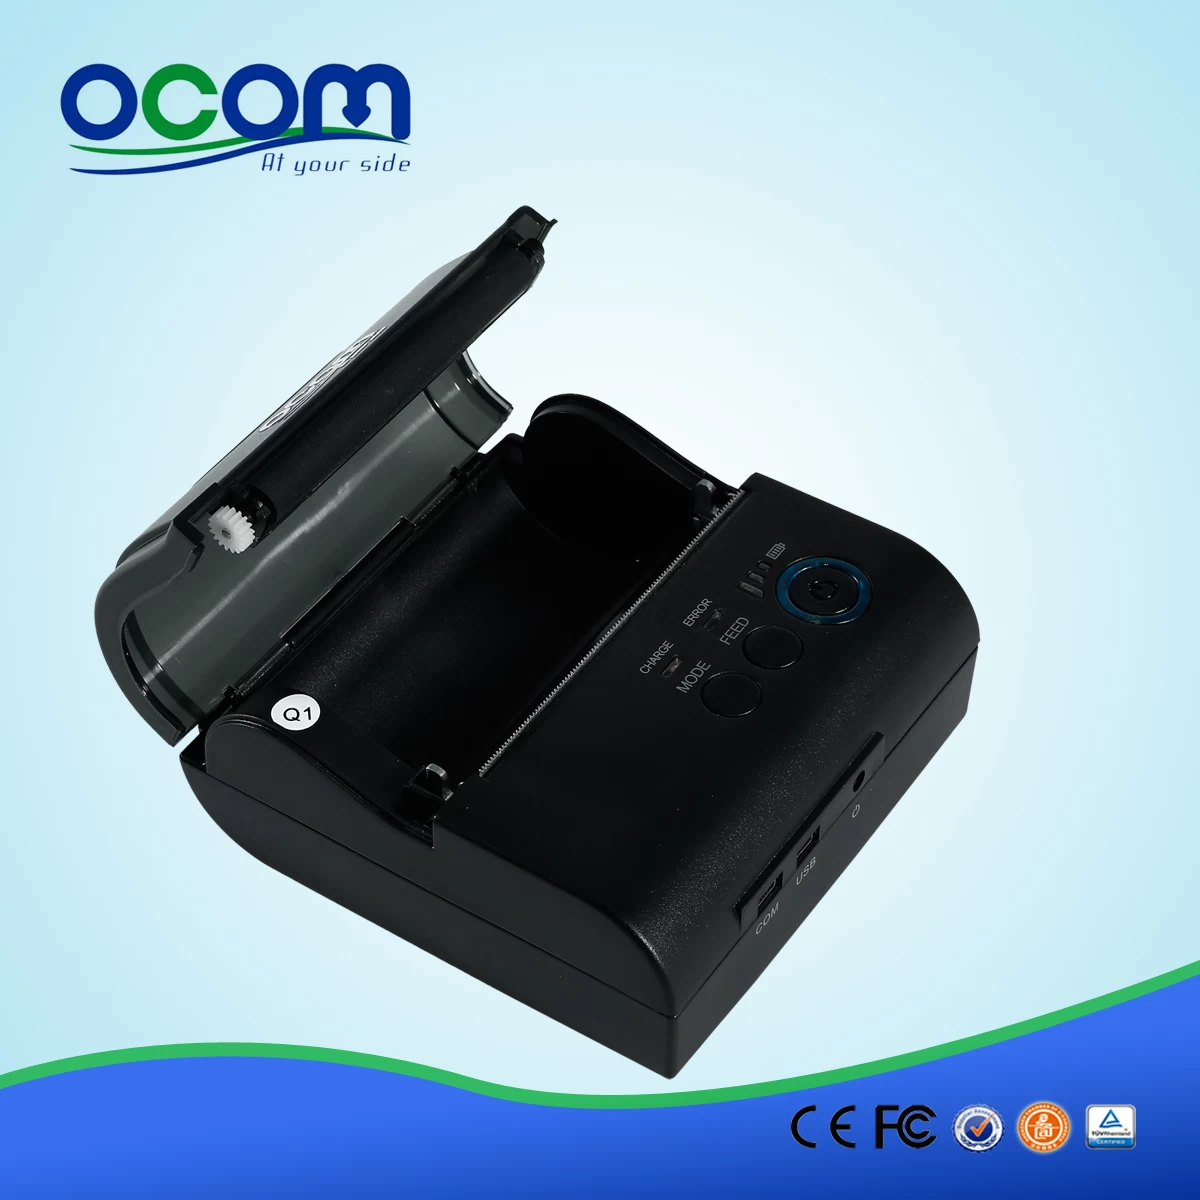 OCPP-M082: OCOM Hot selling cheap 80mm bluetooth printer, bluetooth printer 80mm